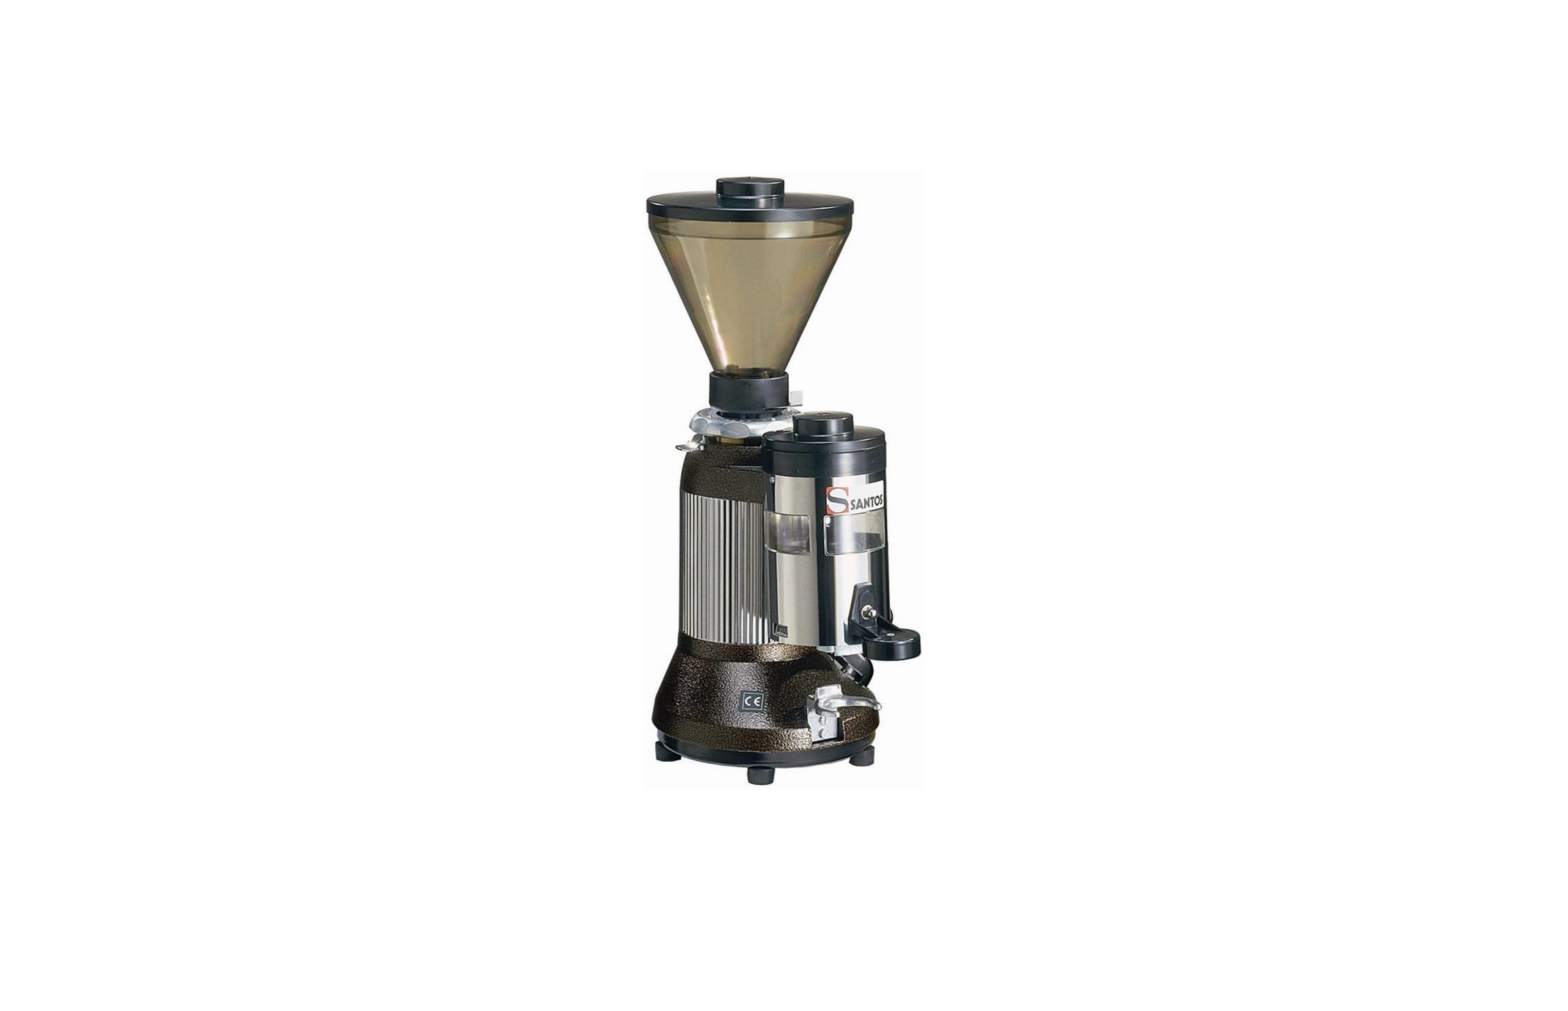 SANTOS Automatic Silent Espresso Coffee Grinder User Manual